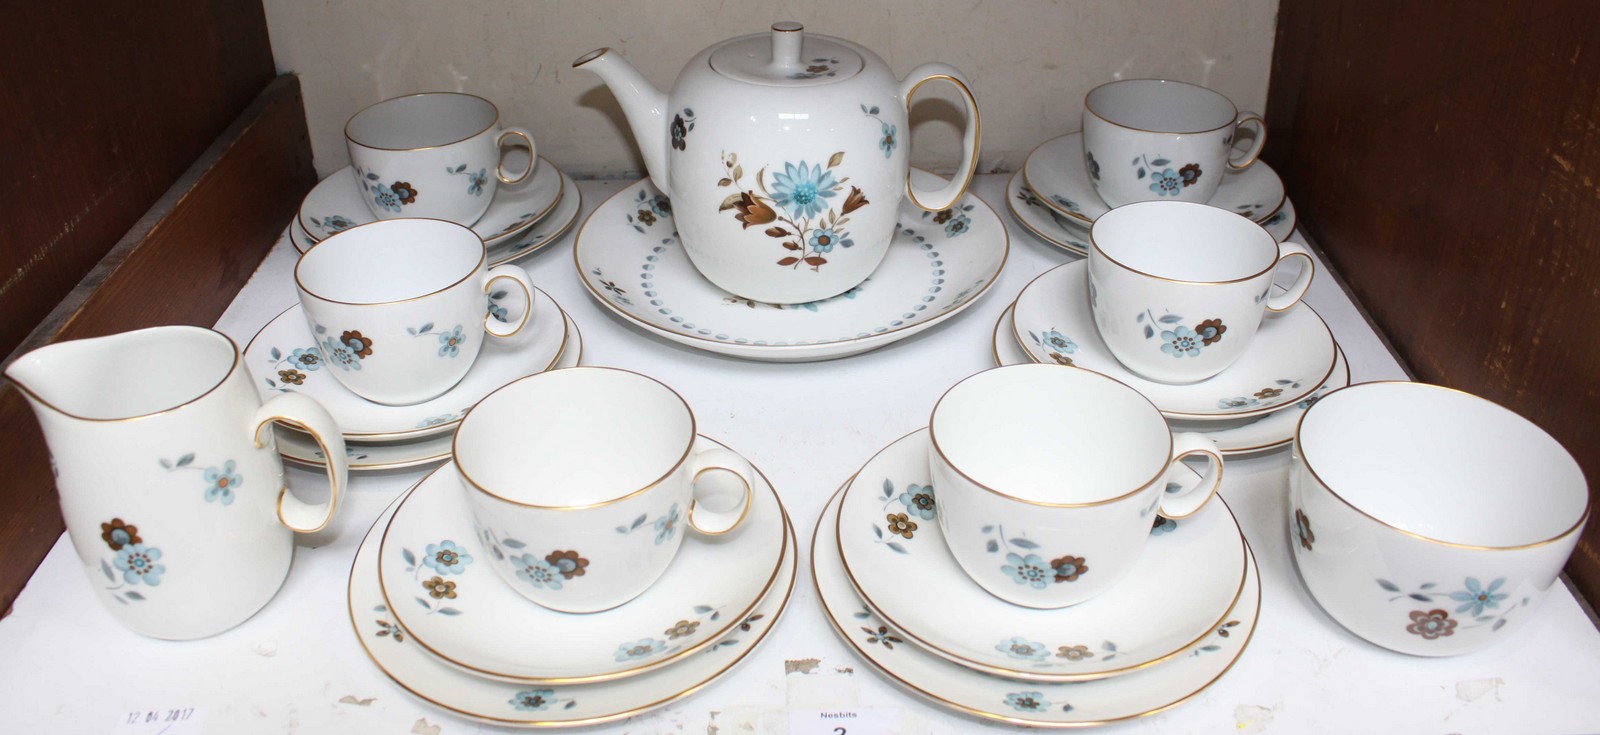 SECTION 4. A Royal Worcester Lucerne pattern tea set, comprising teapot, saucers, side plates,